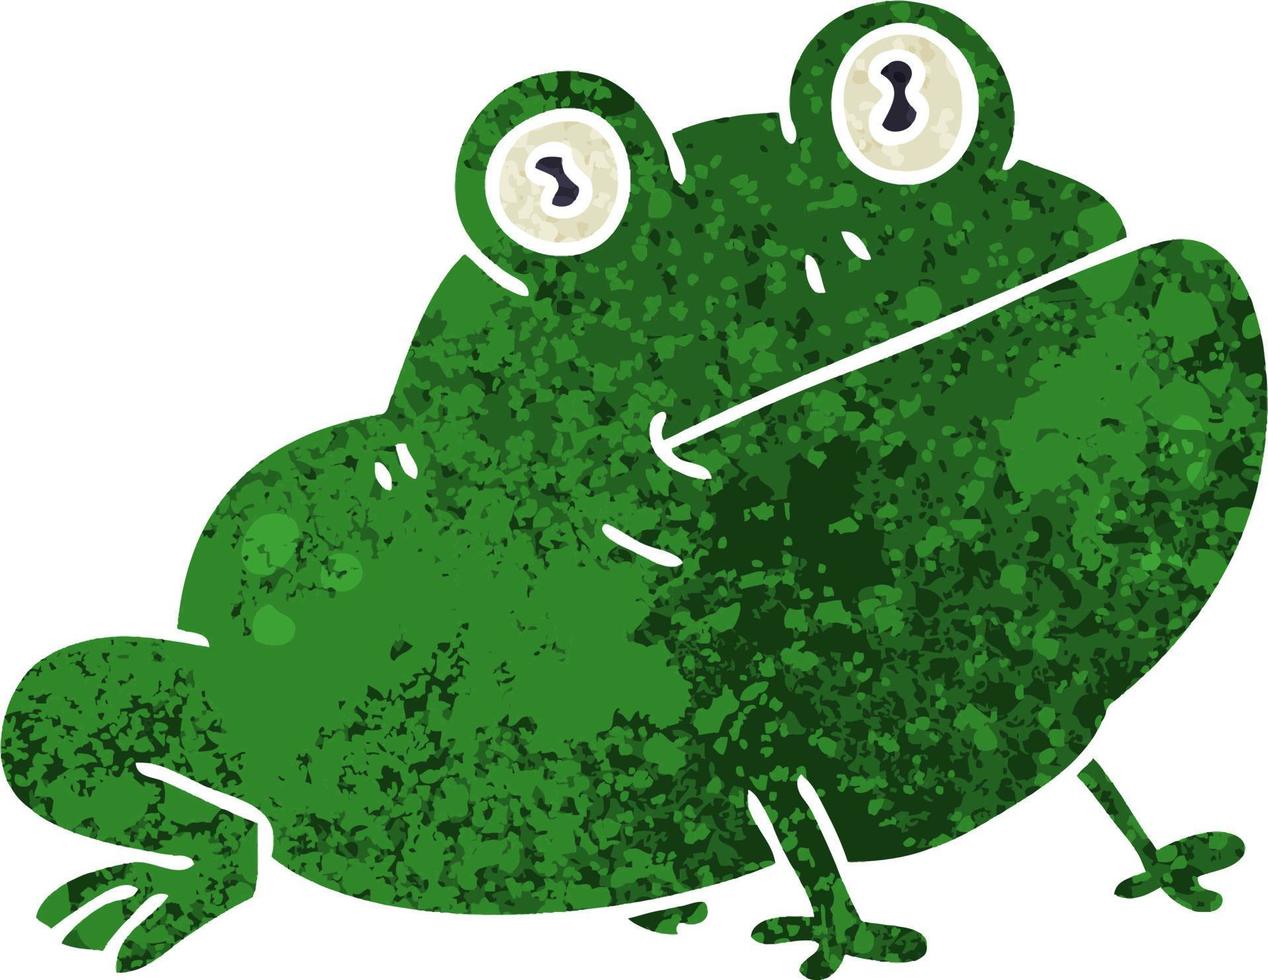 quirky retro illustration style cartoon frog vector